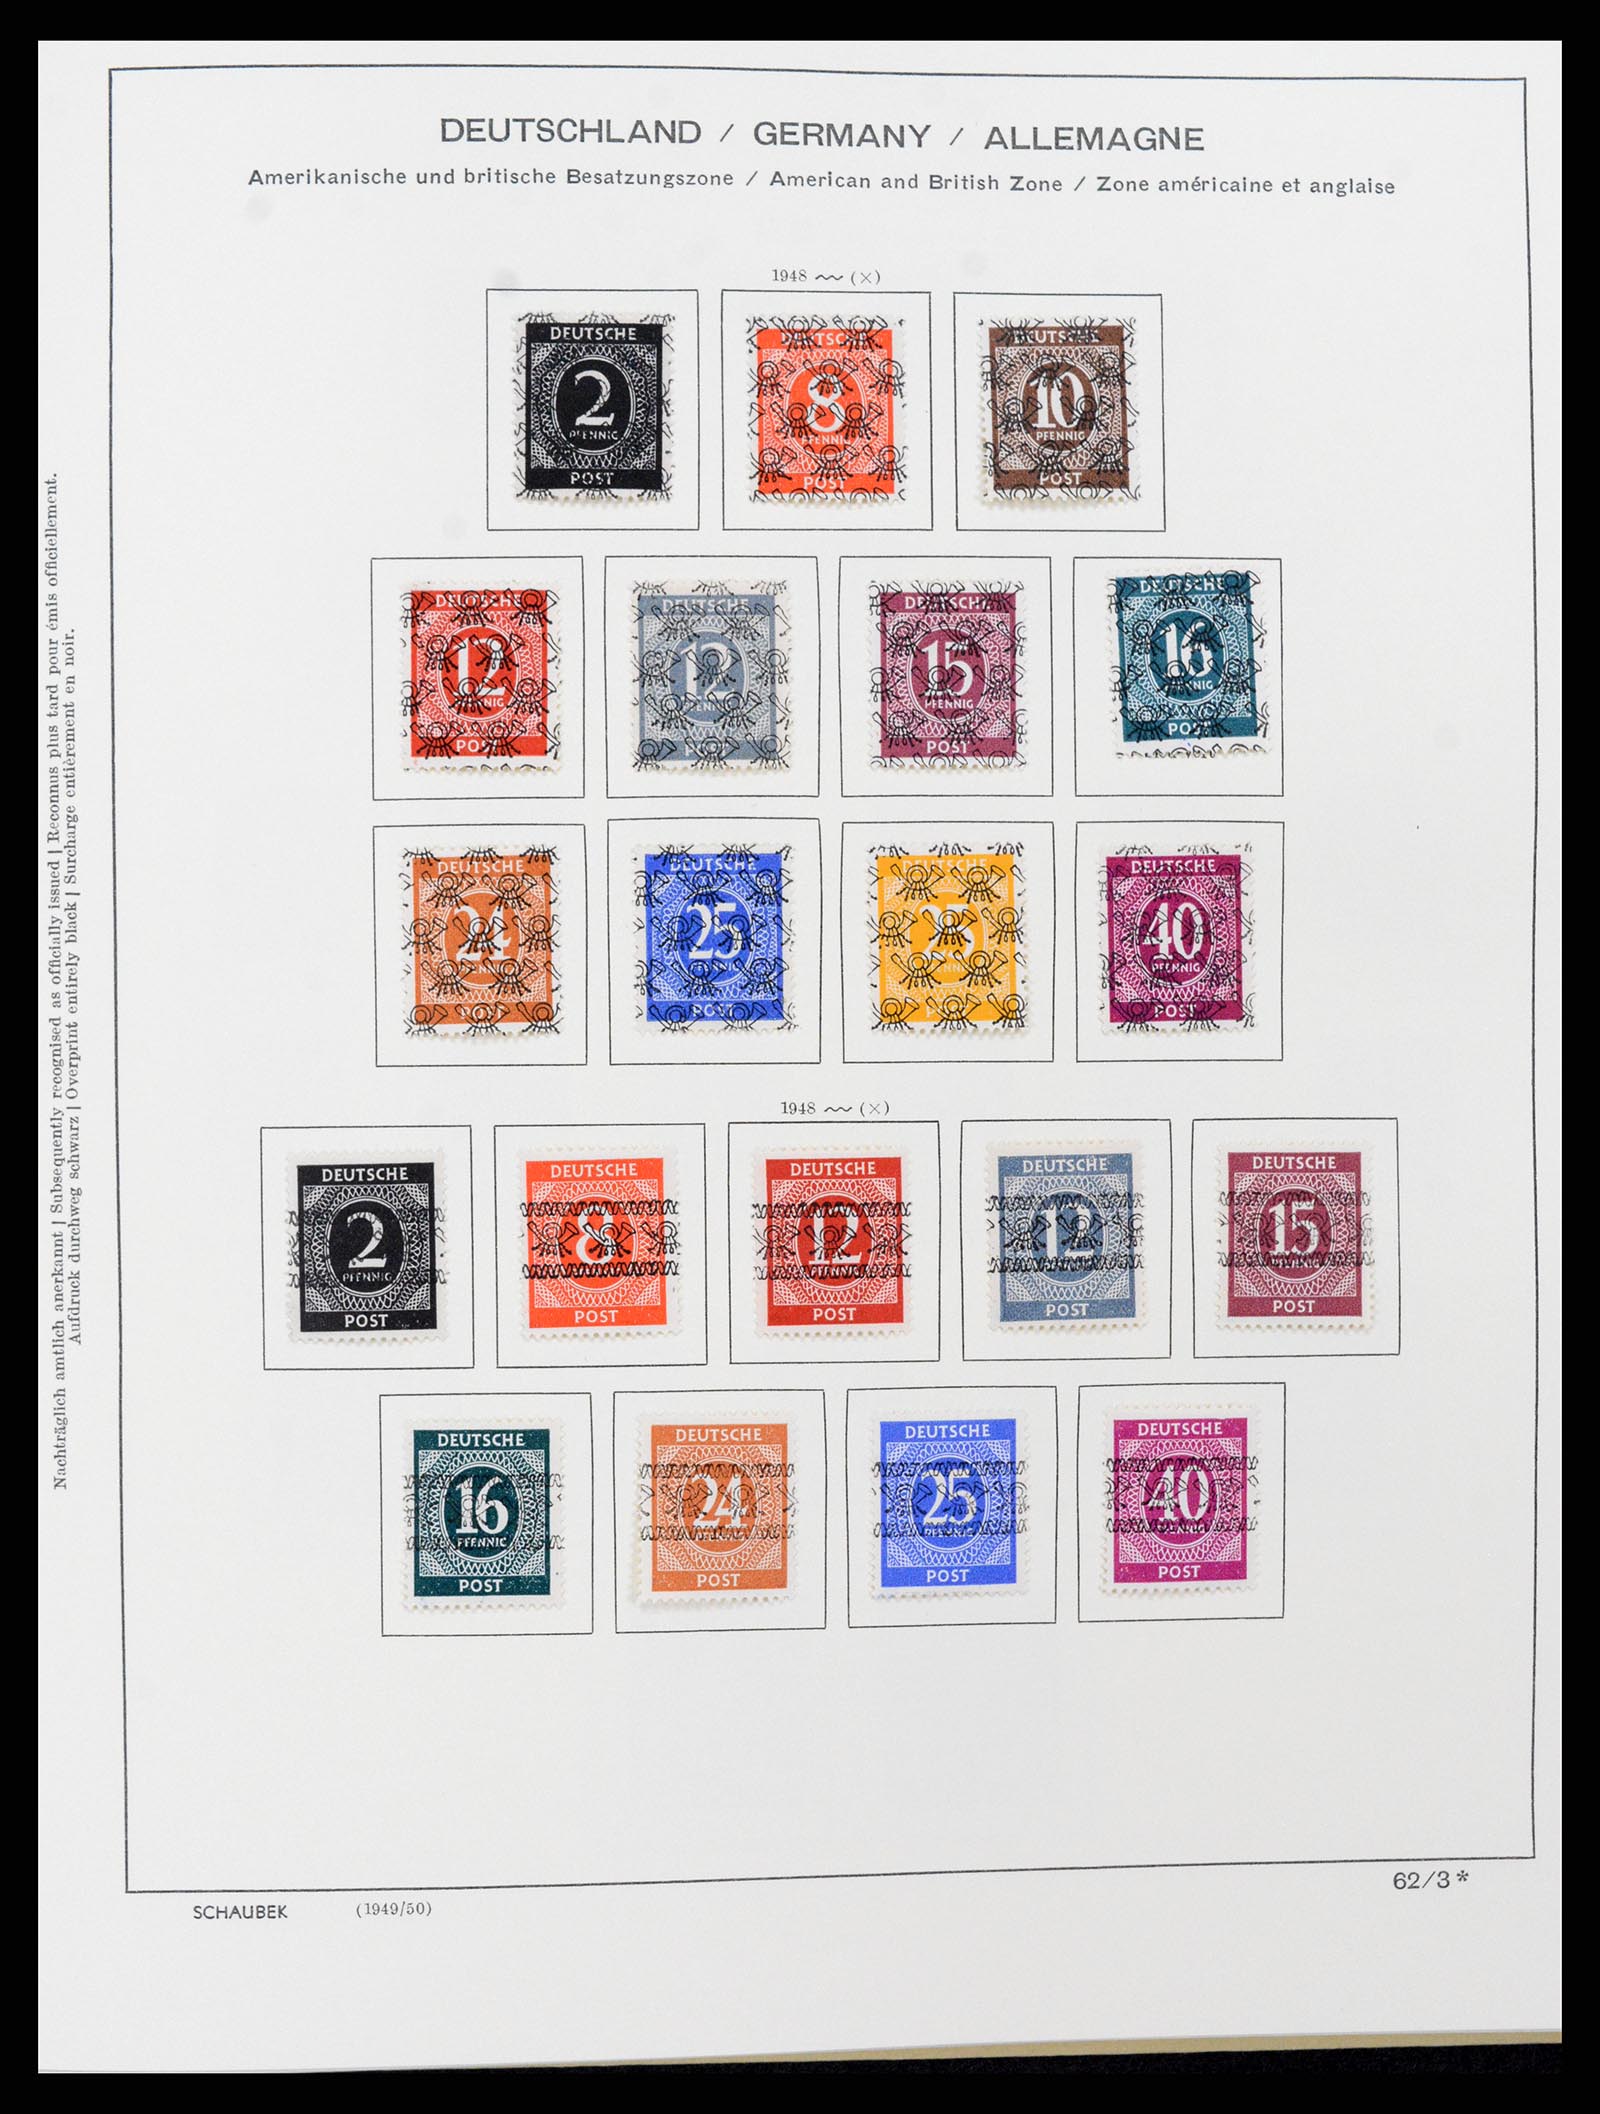 37645 012 - Stamp collection 37645 German Zones 1945-1949.